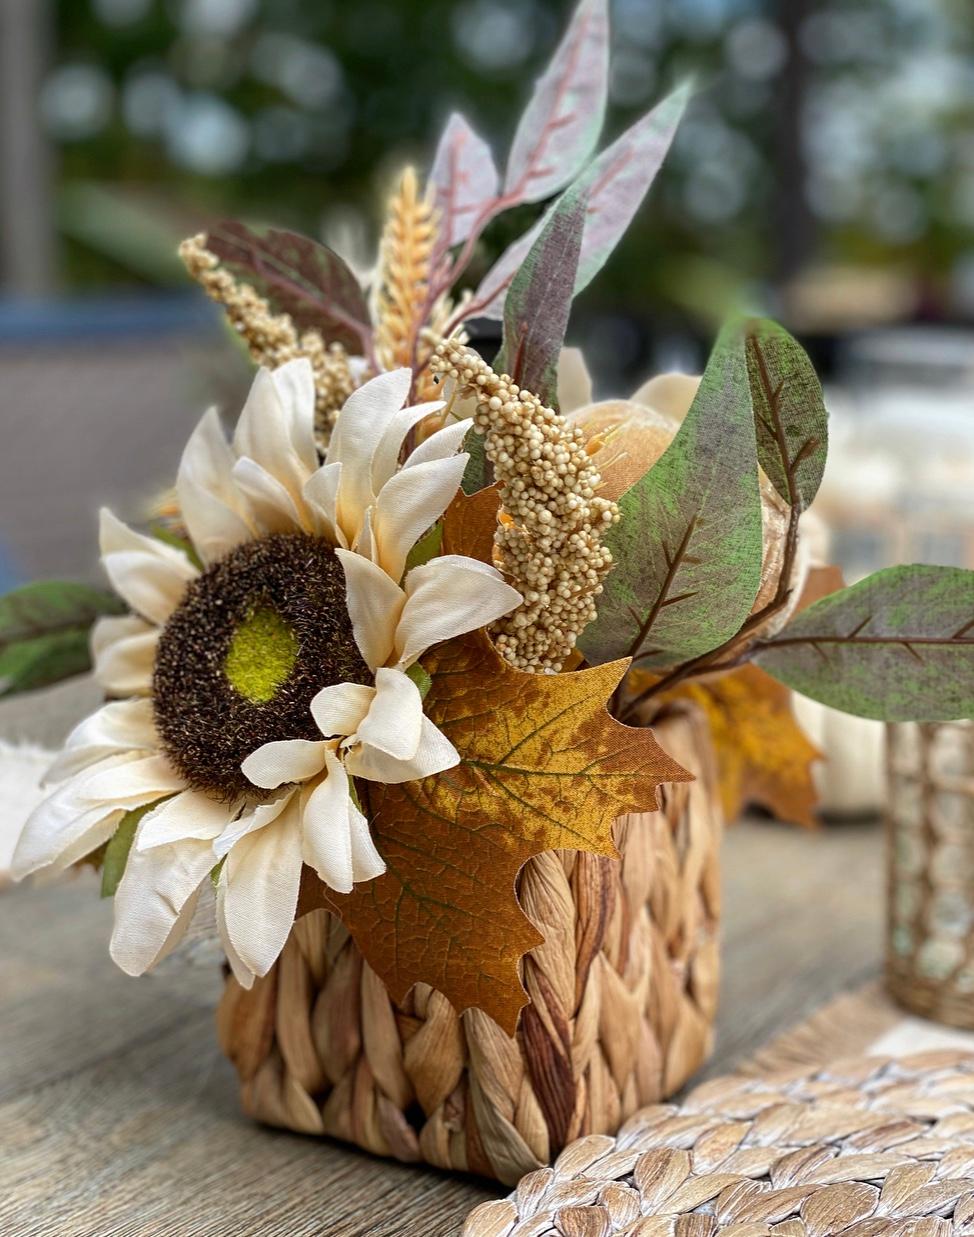 A floral arrangement includes sunflowers. (Courtesy of Yelena Oleynik)